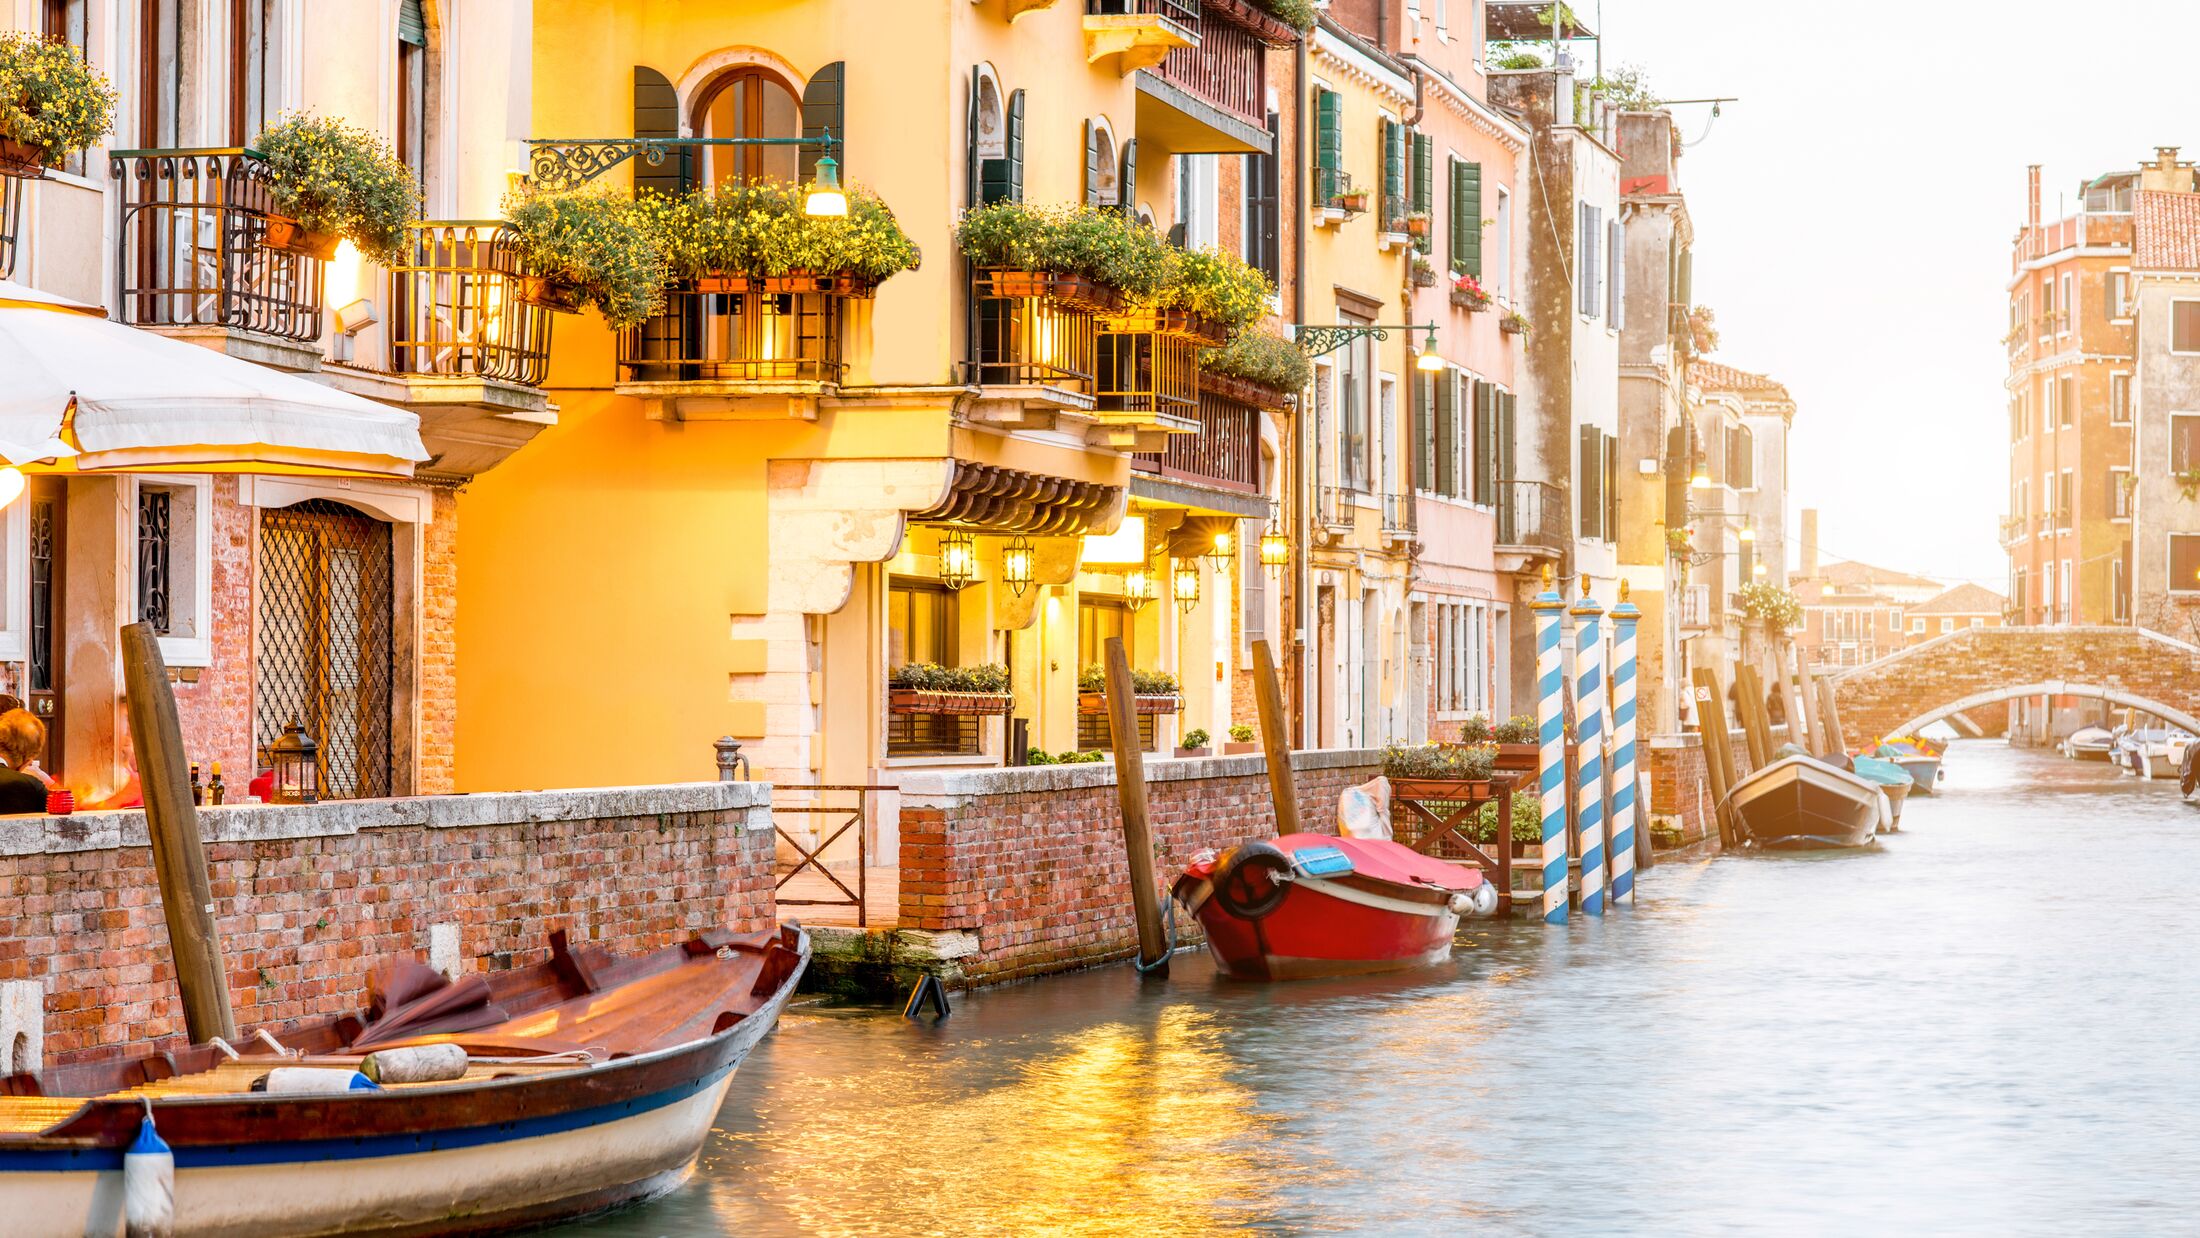 Small romantic water canal with restaurants in Dorsoduro region in Venice